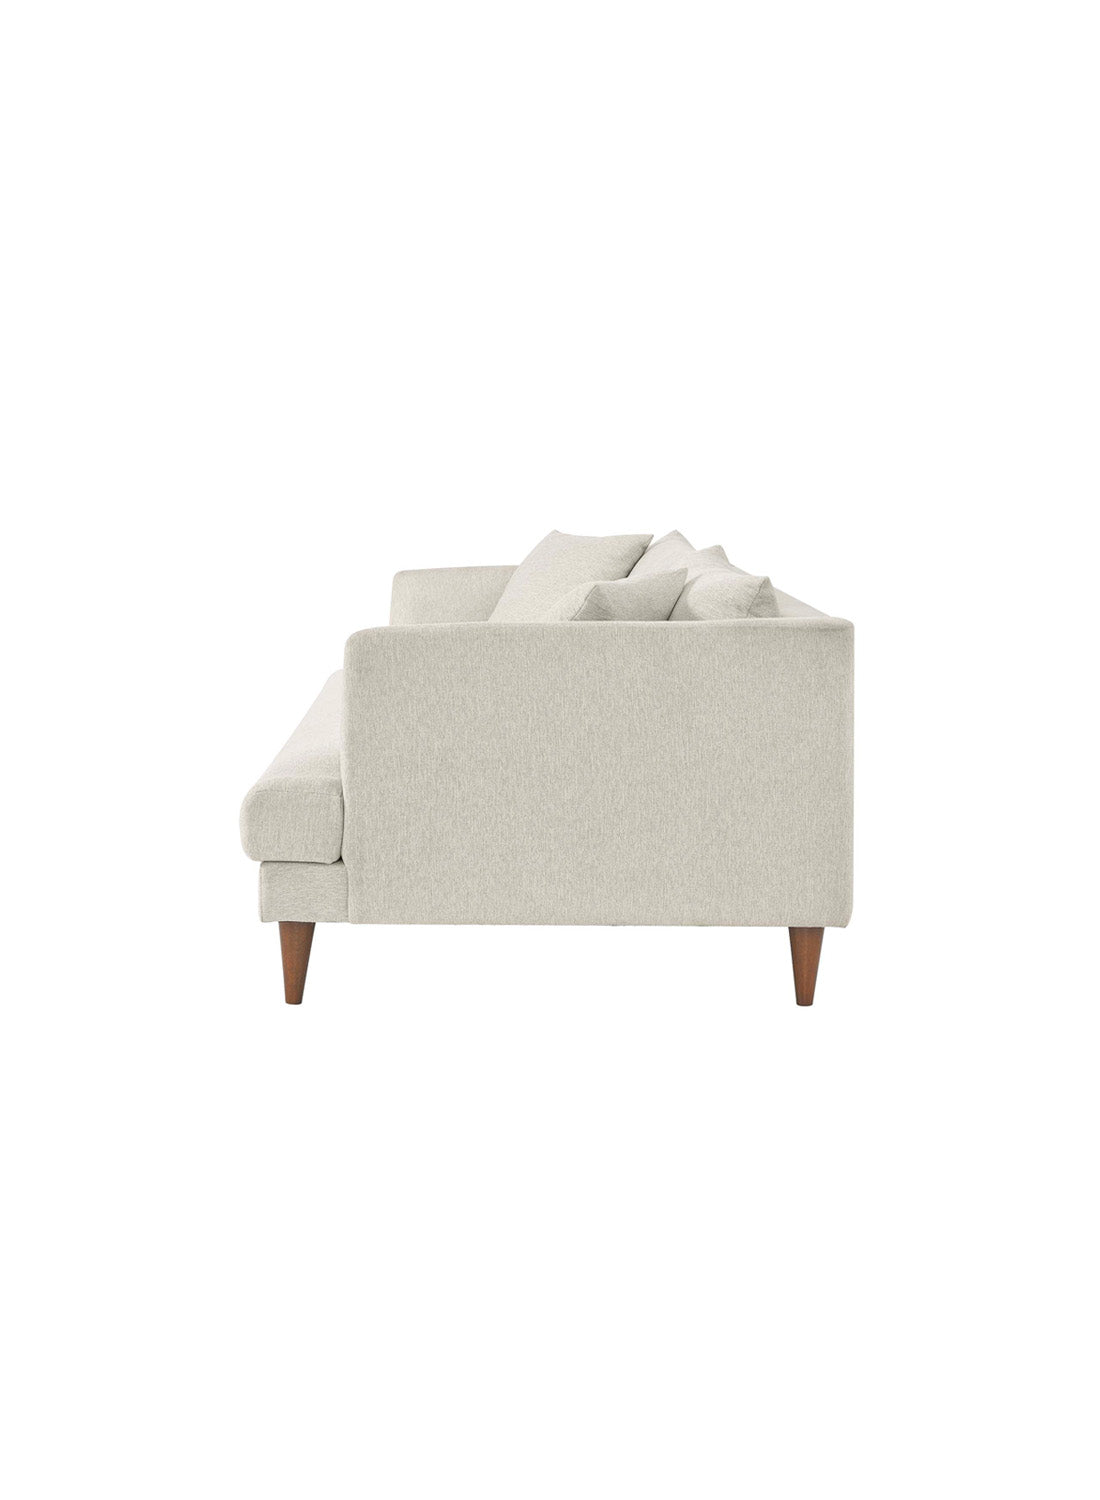 Luxton Sofa, ivory